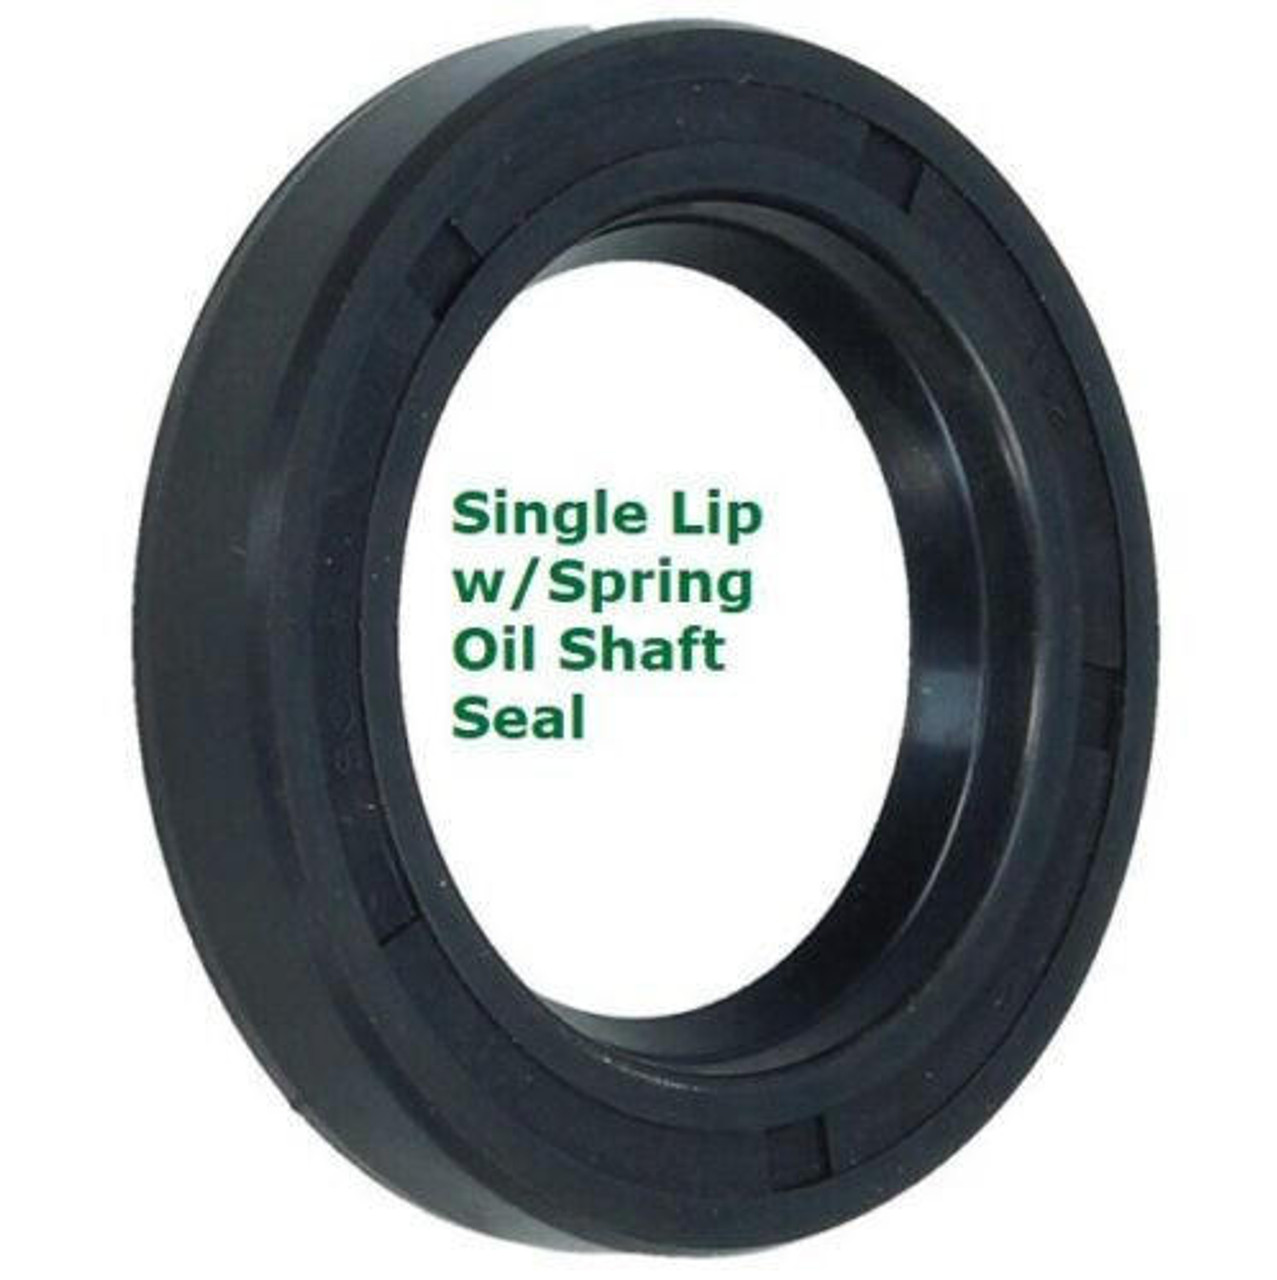 Metric Oil Shaft Seal 270 x 310 x 16mm   Single Lip   Price for 1 pc